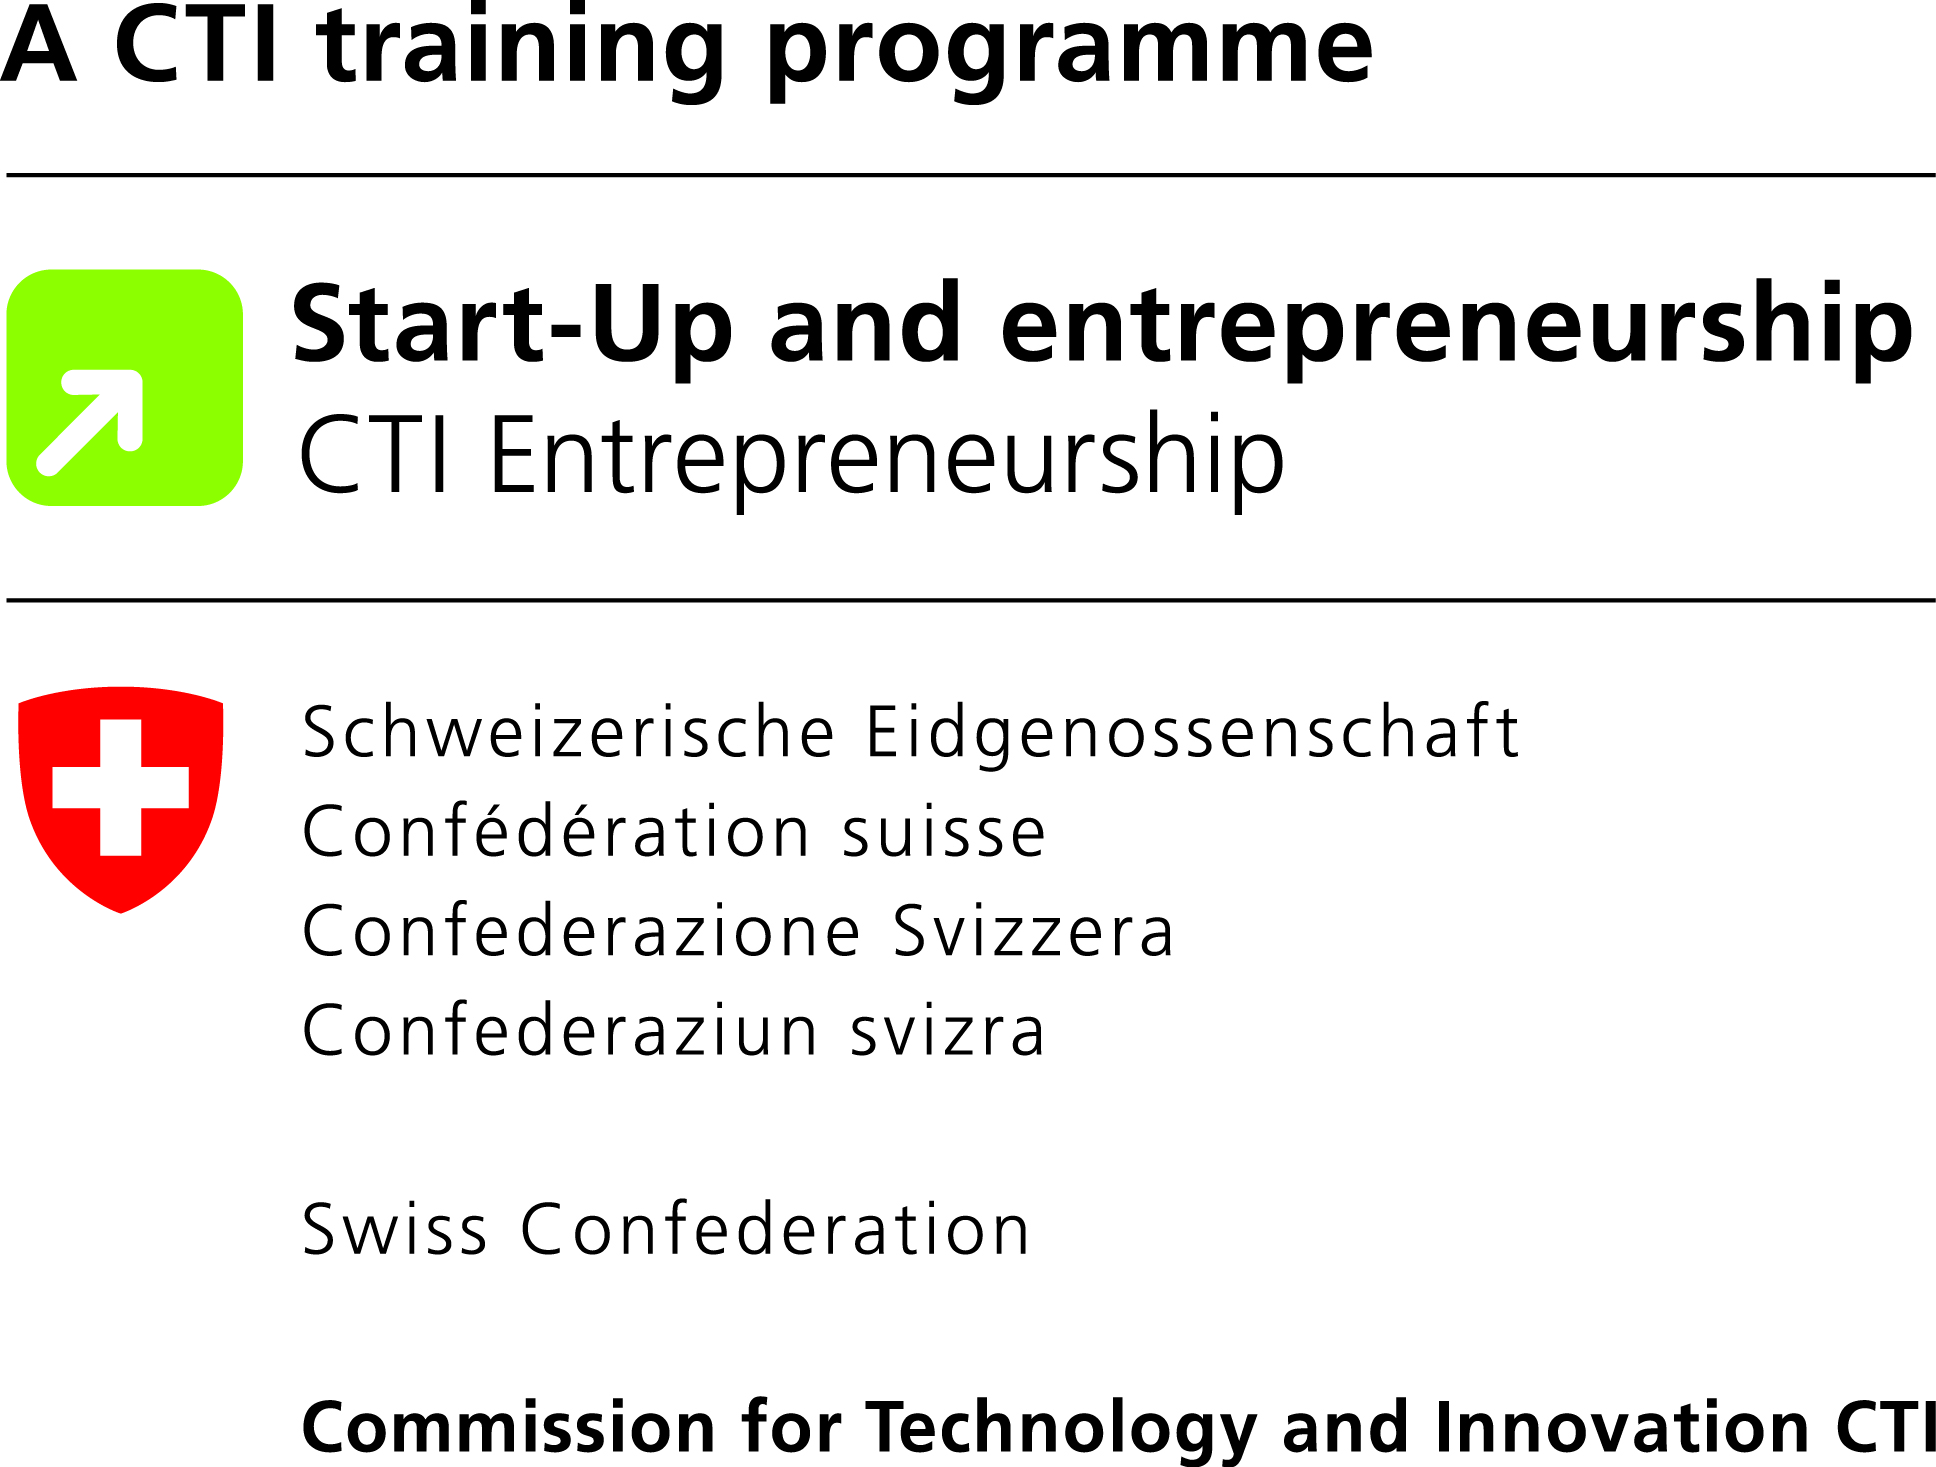 CTI Entrepreneurship